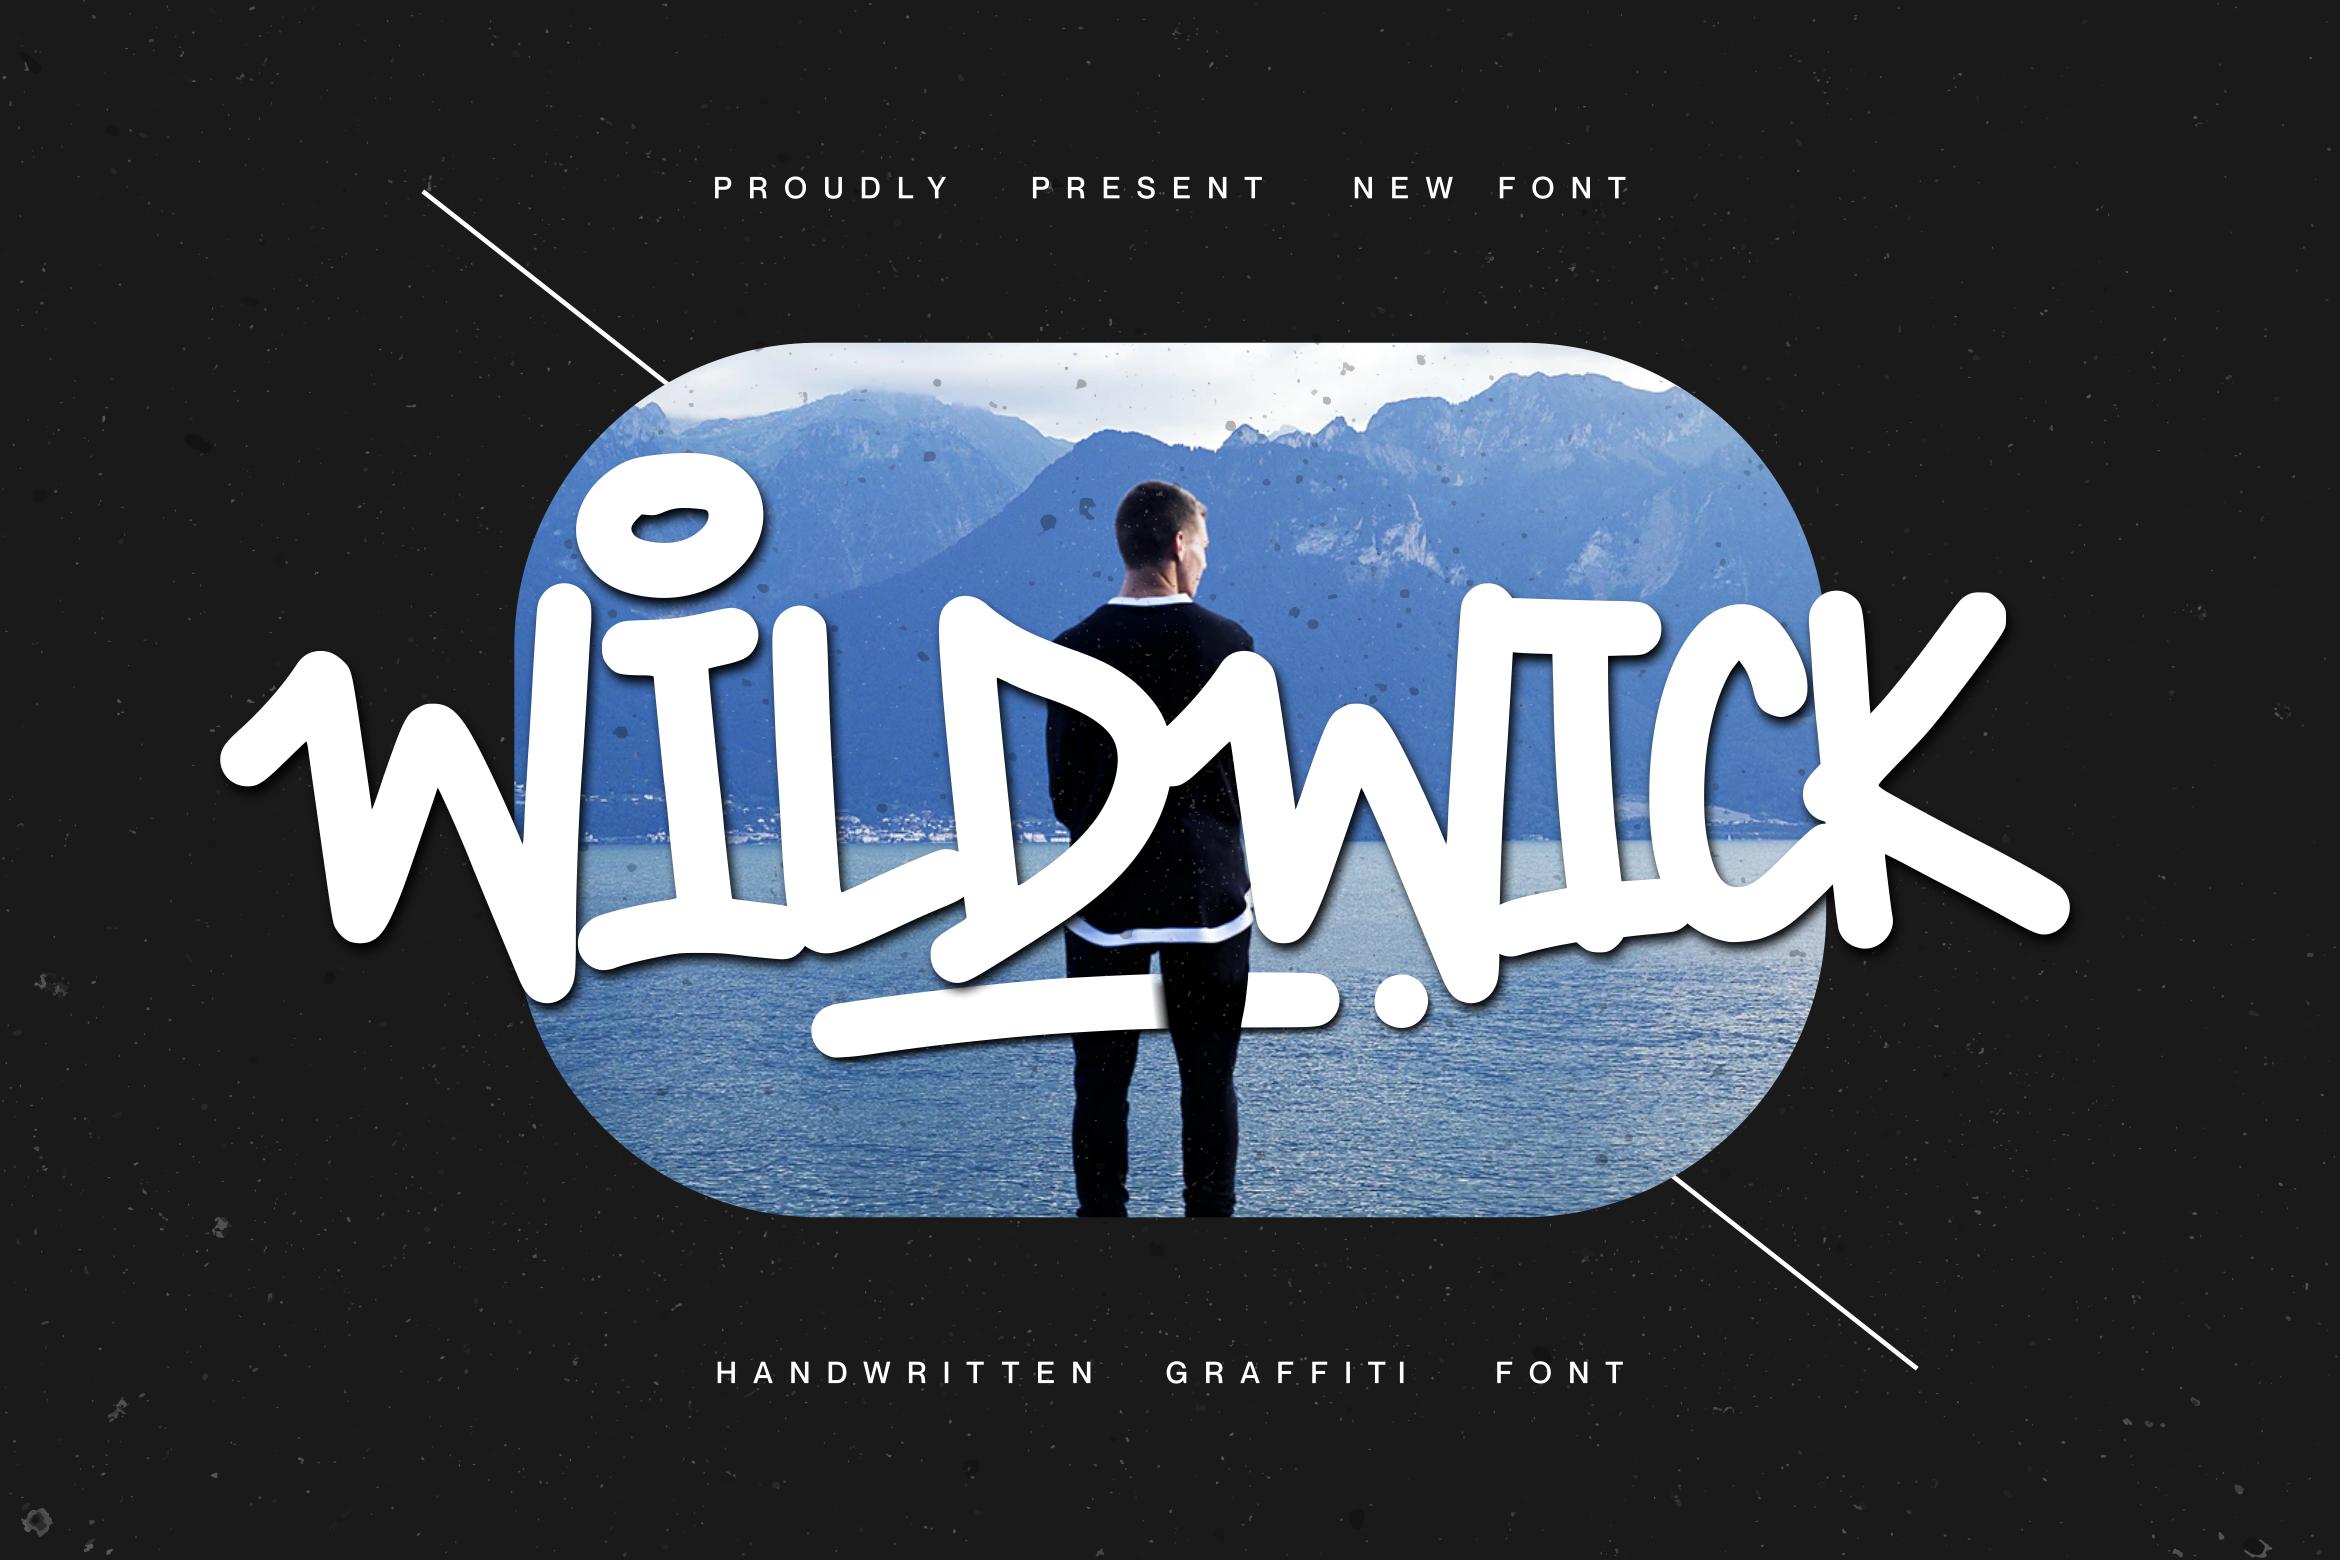 Wildwick Font